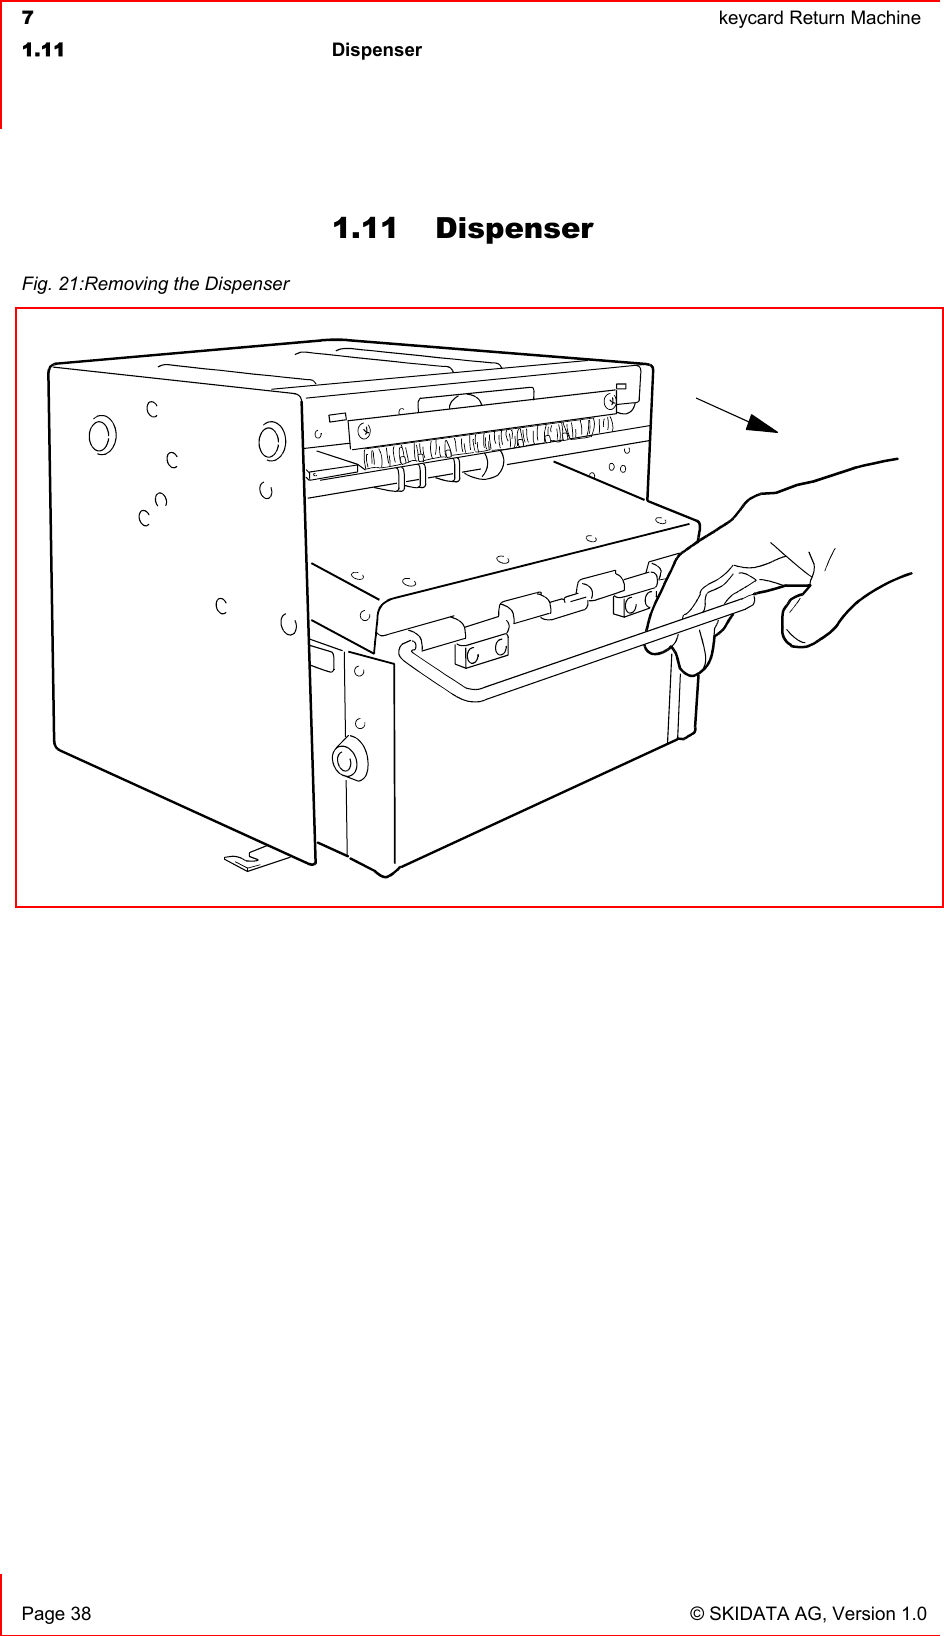  7  keycard Return Machine1.11 Dispenser  Page 38  © SKIDATA AG, Version 1.0 1.11 Dispenser Fig. 21:Removing the Dispenser 